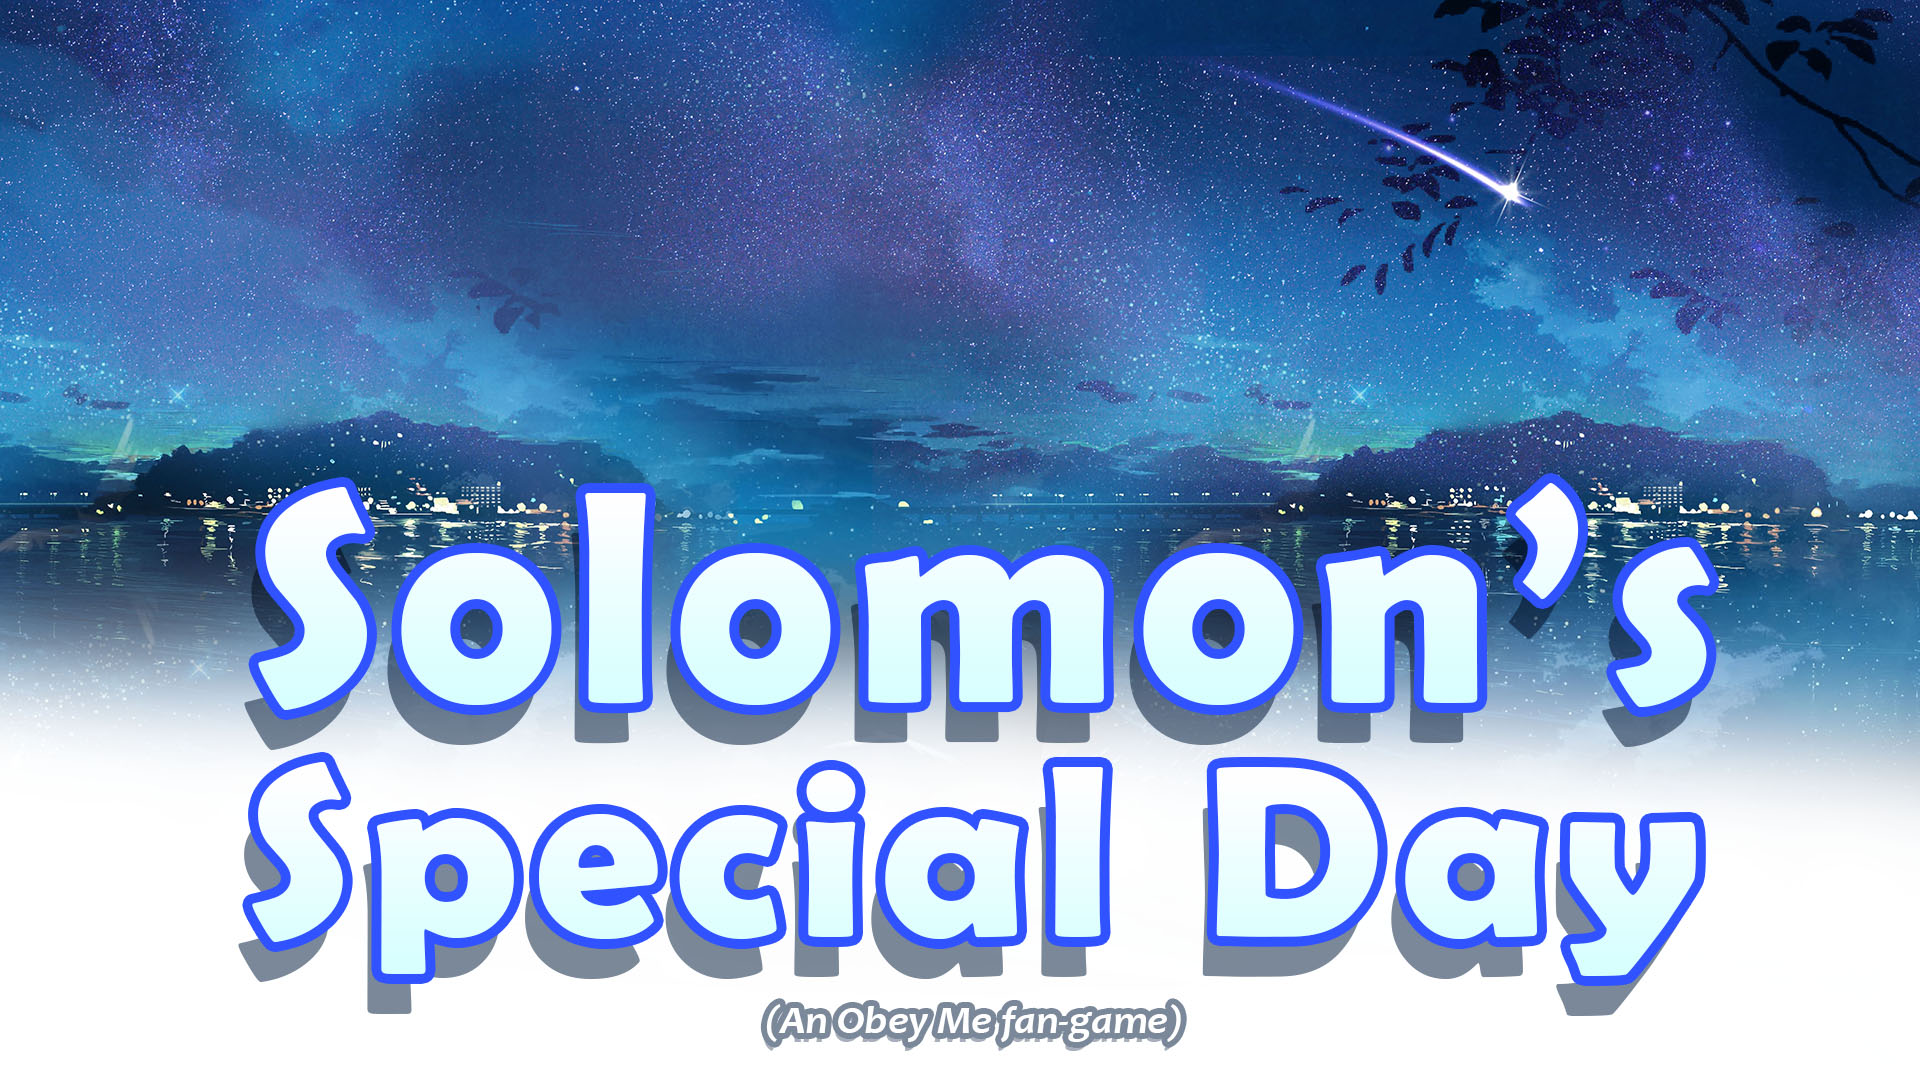 Solomon's Special Day